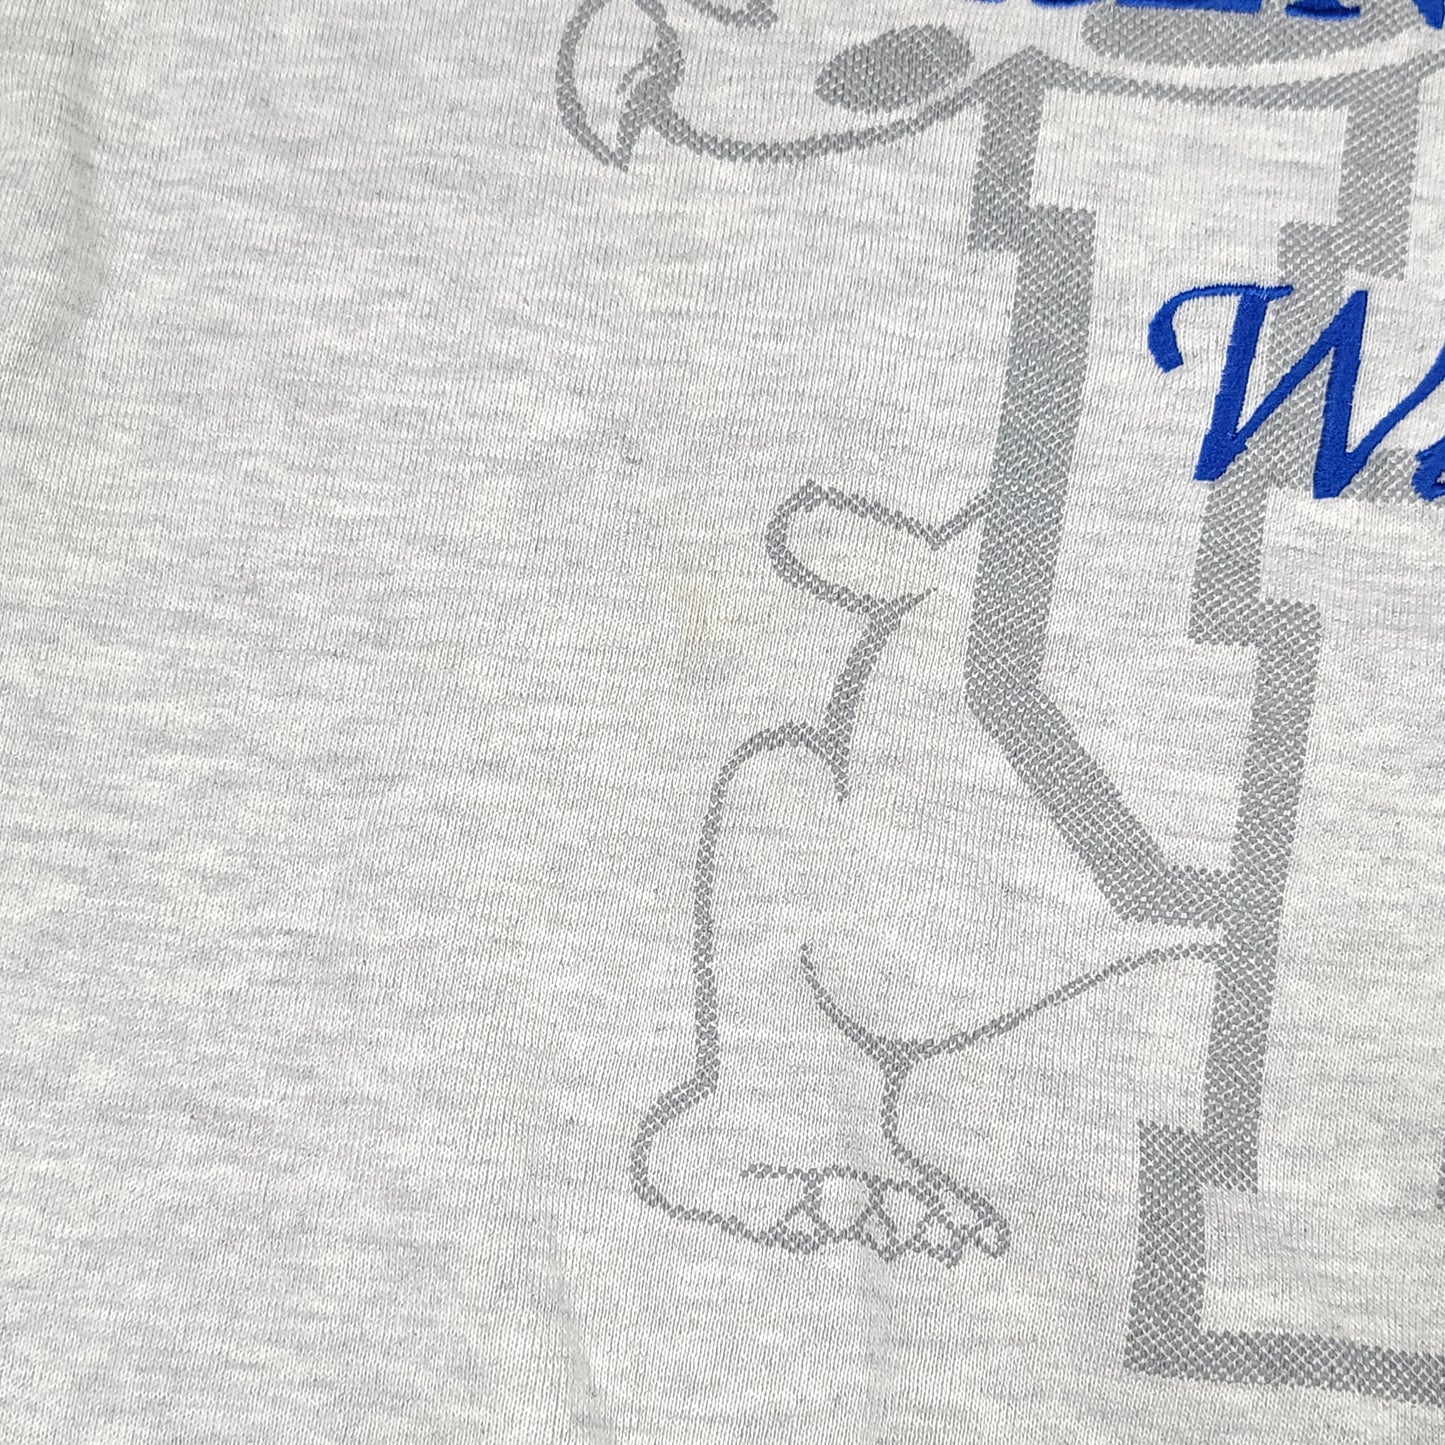 Vintage University of Kentucky Wildcats Gray Embroidered Sweatshirt